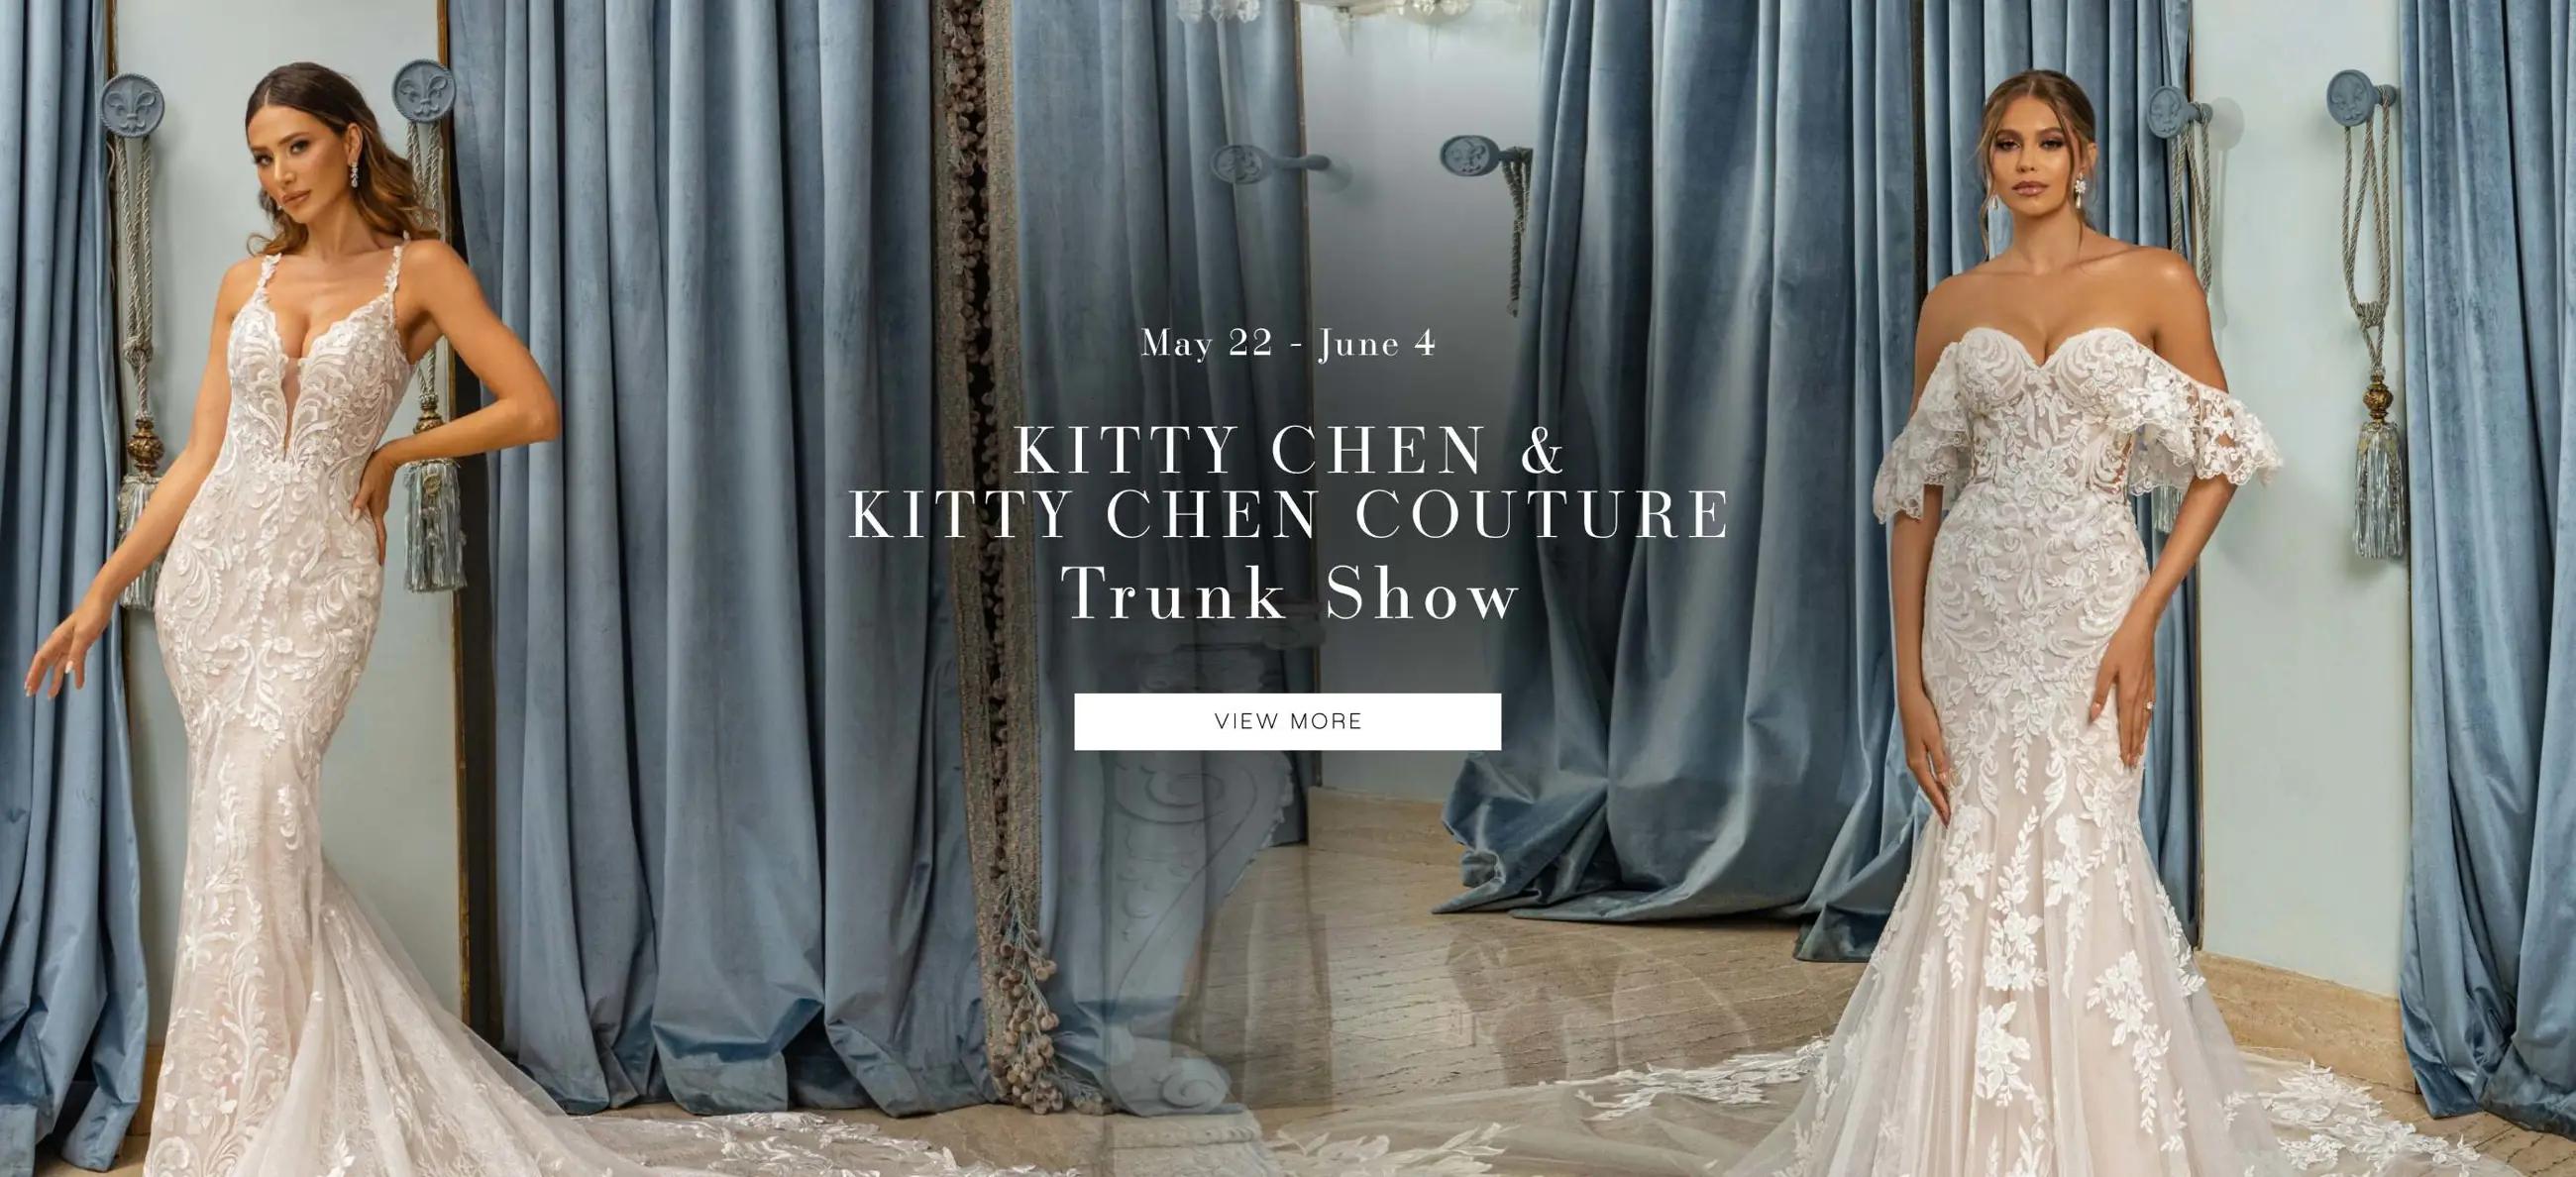 Kitty Chen Couture Trunk Show Banner Desktop